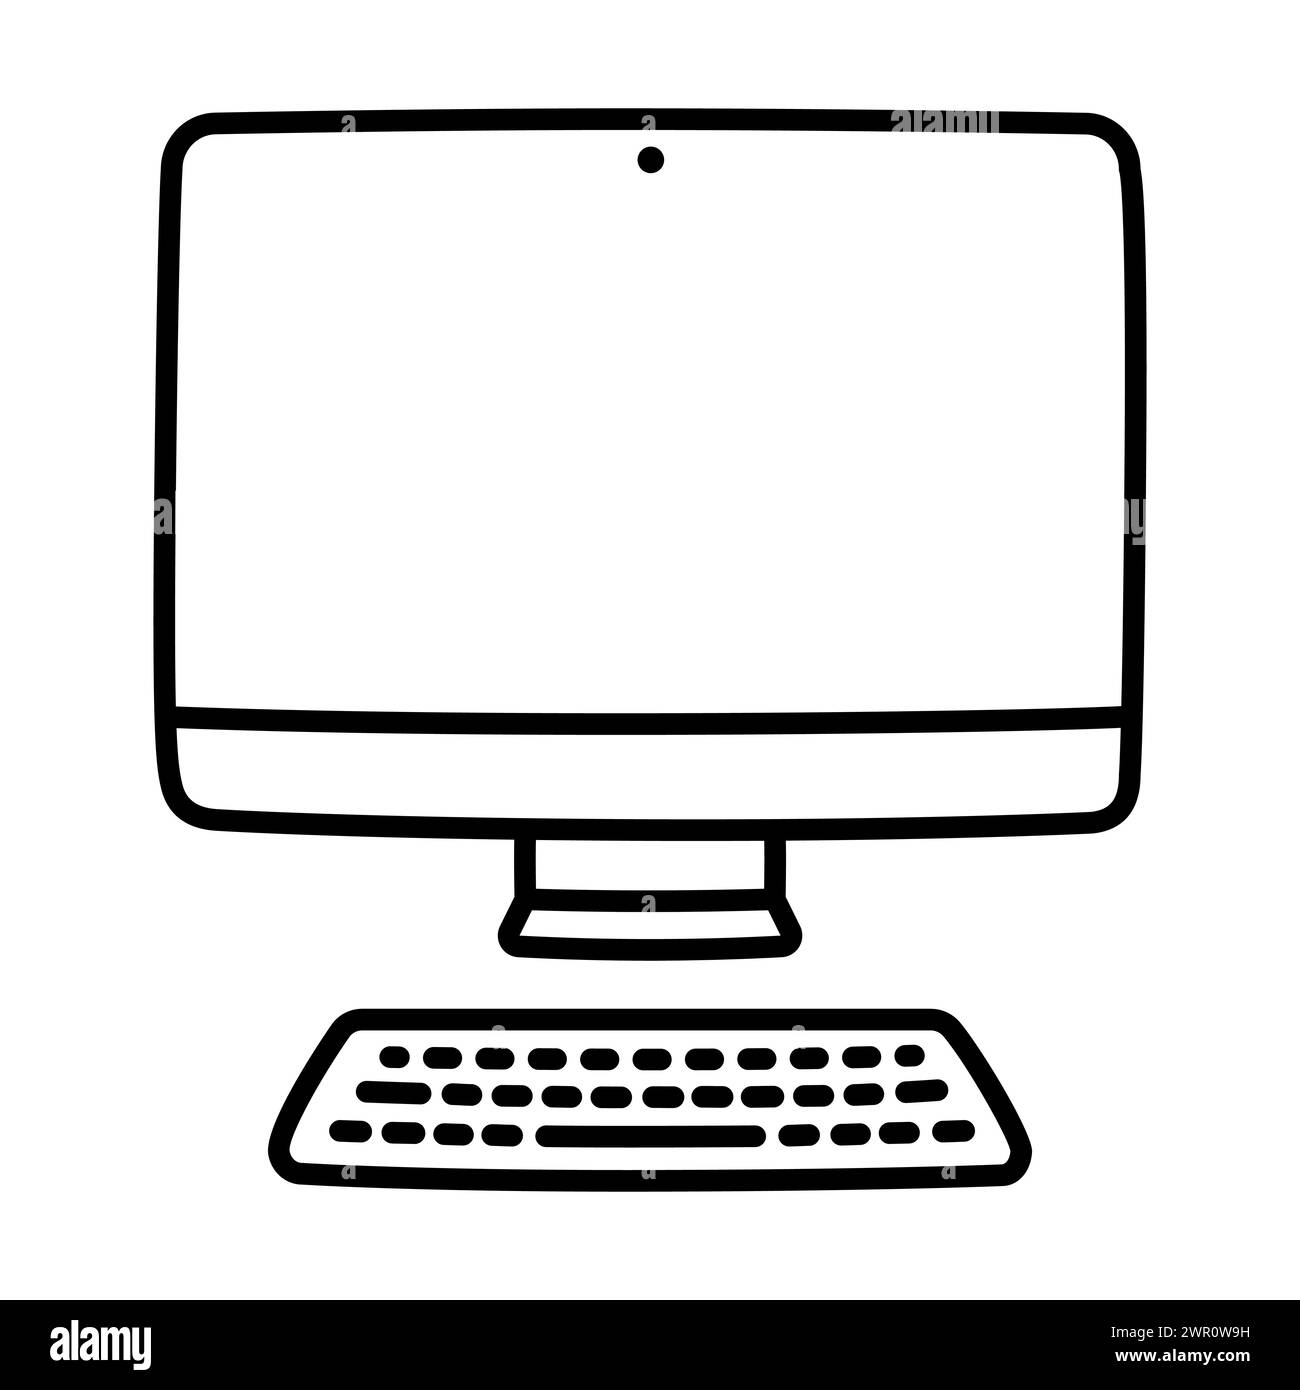 Hand drawn desktop computer doodle icon, cute cartoon drawing. Vector clip art illustration. Stock Vector